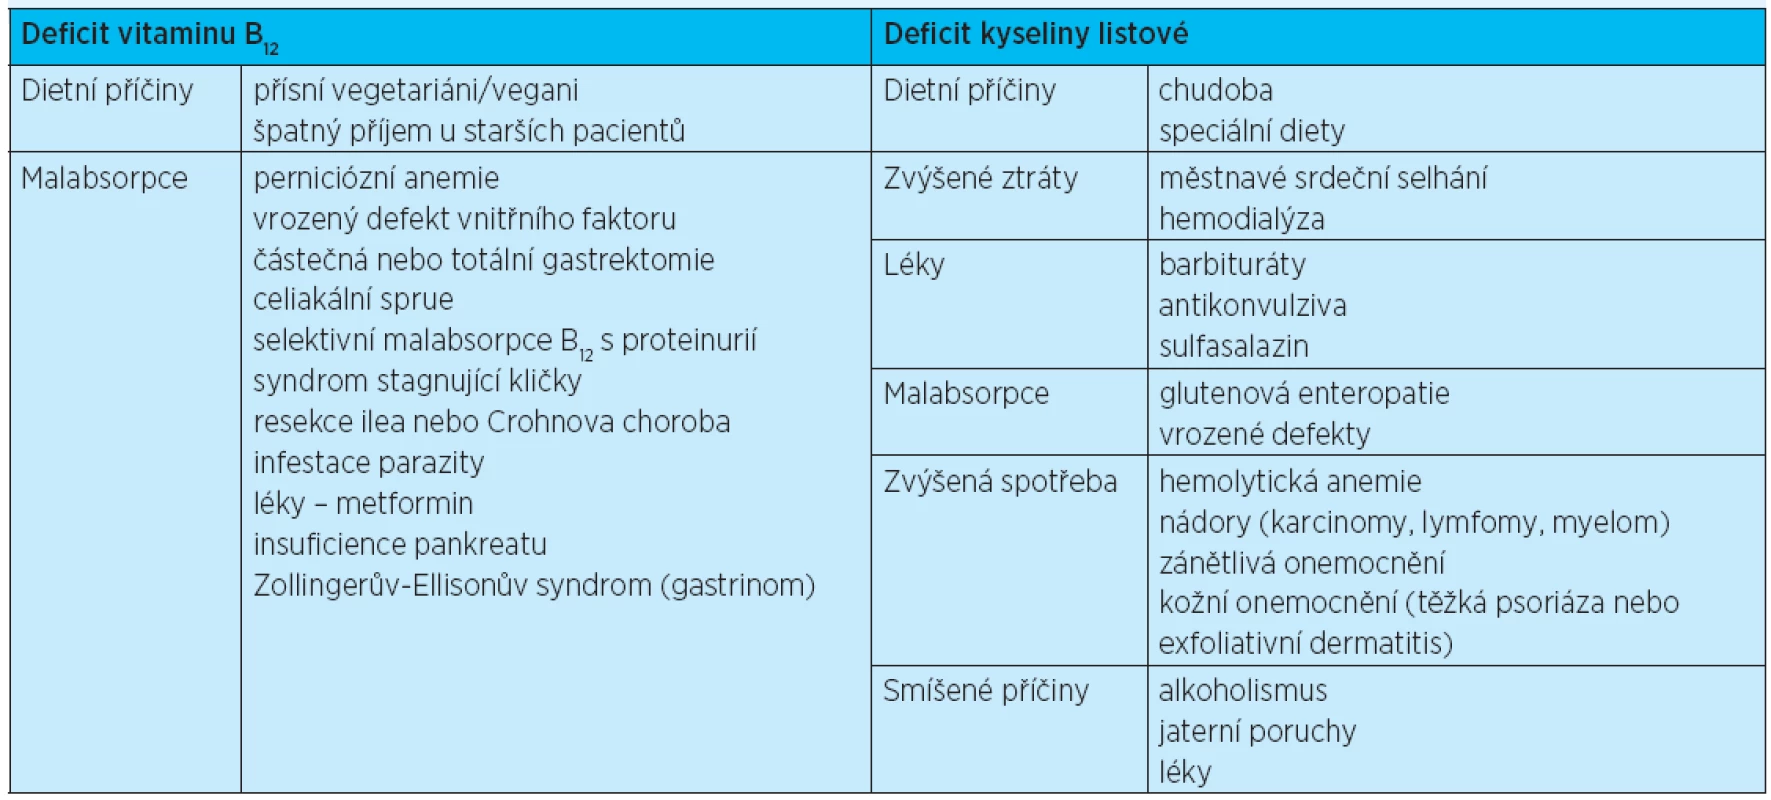 Příčiny deficitu vitaminu B&lt;sub&gt;12&lt;/sub&gt; a kyseliny listové